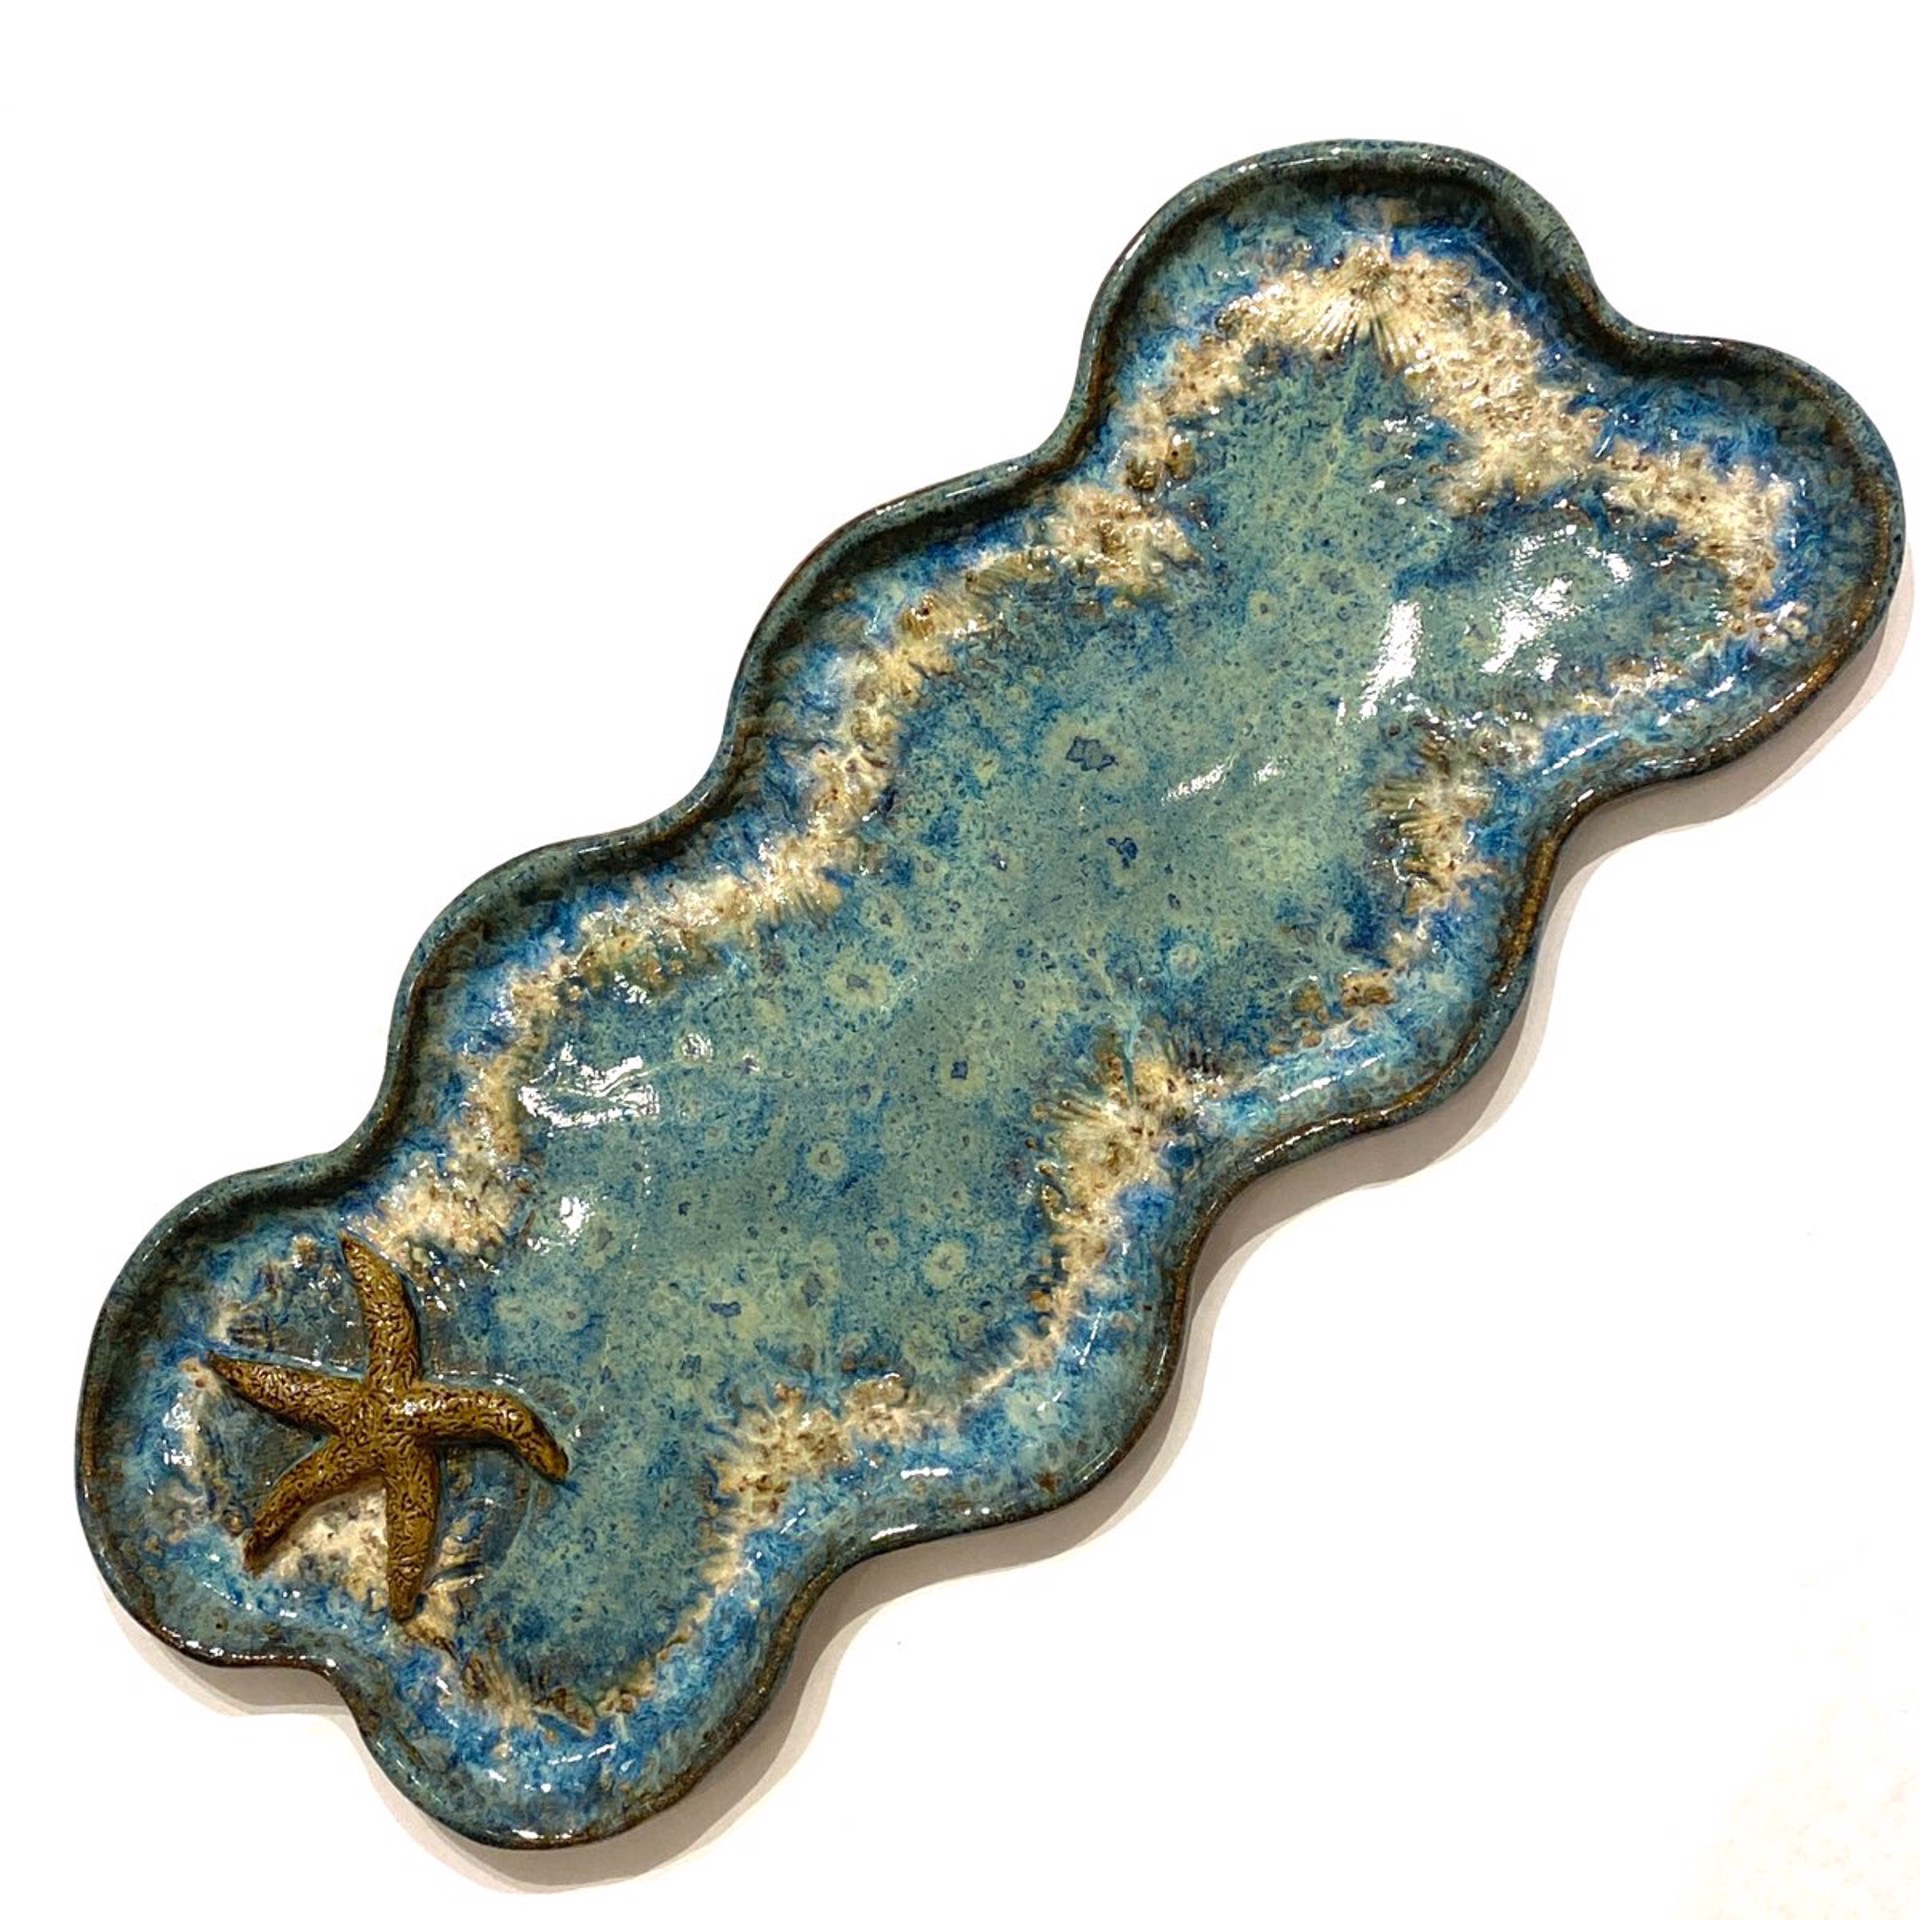 LG23-1013  Long Tray with Starfish (Blue Glaze) by Jim & Steffi Logan